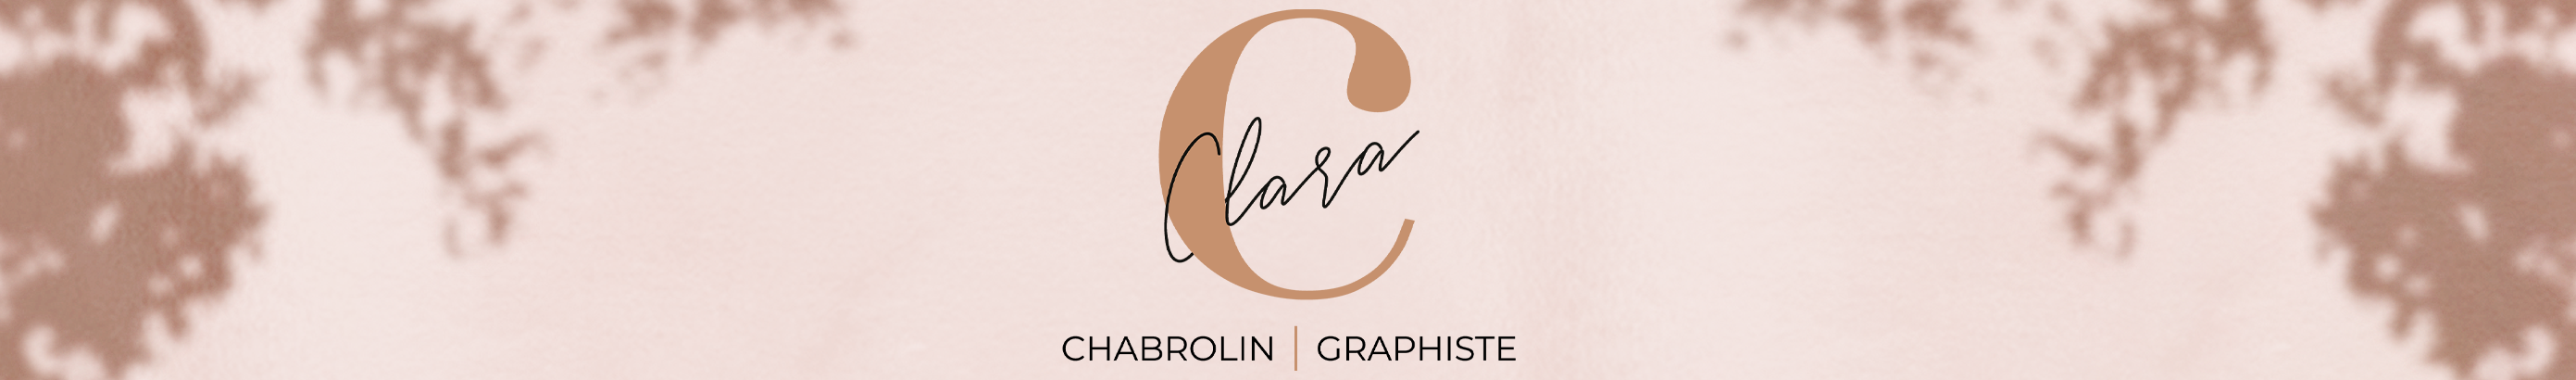 Clara Chabrolins profilbanner